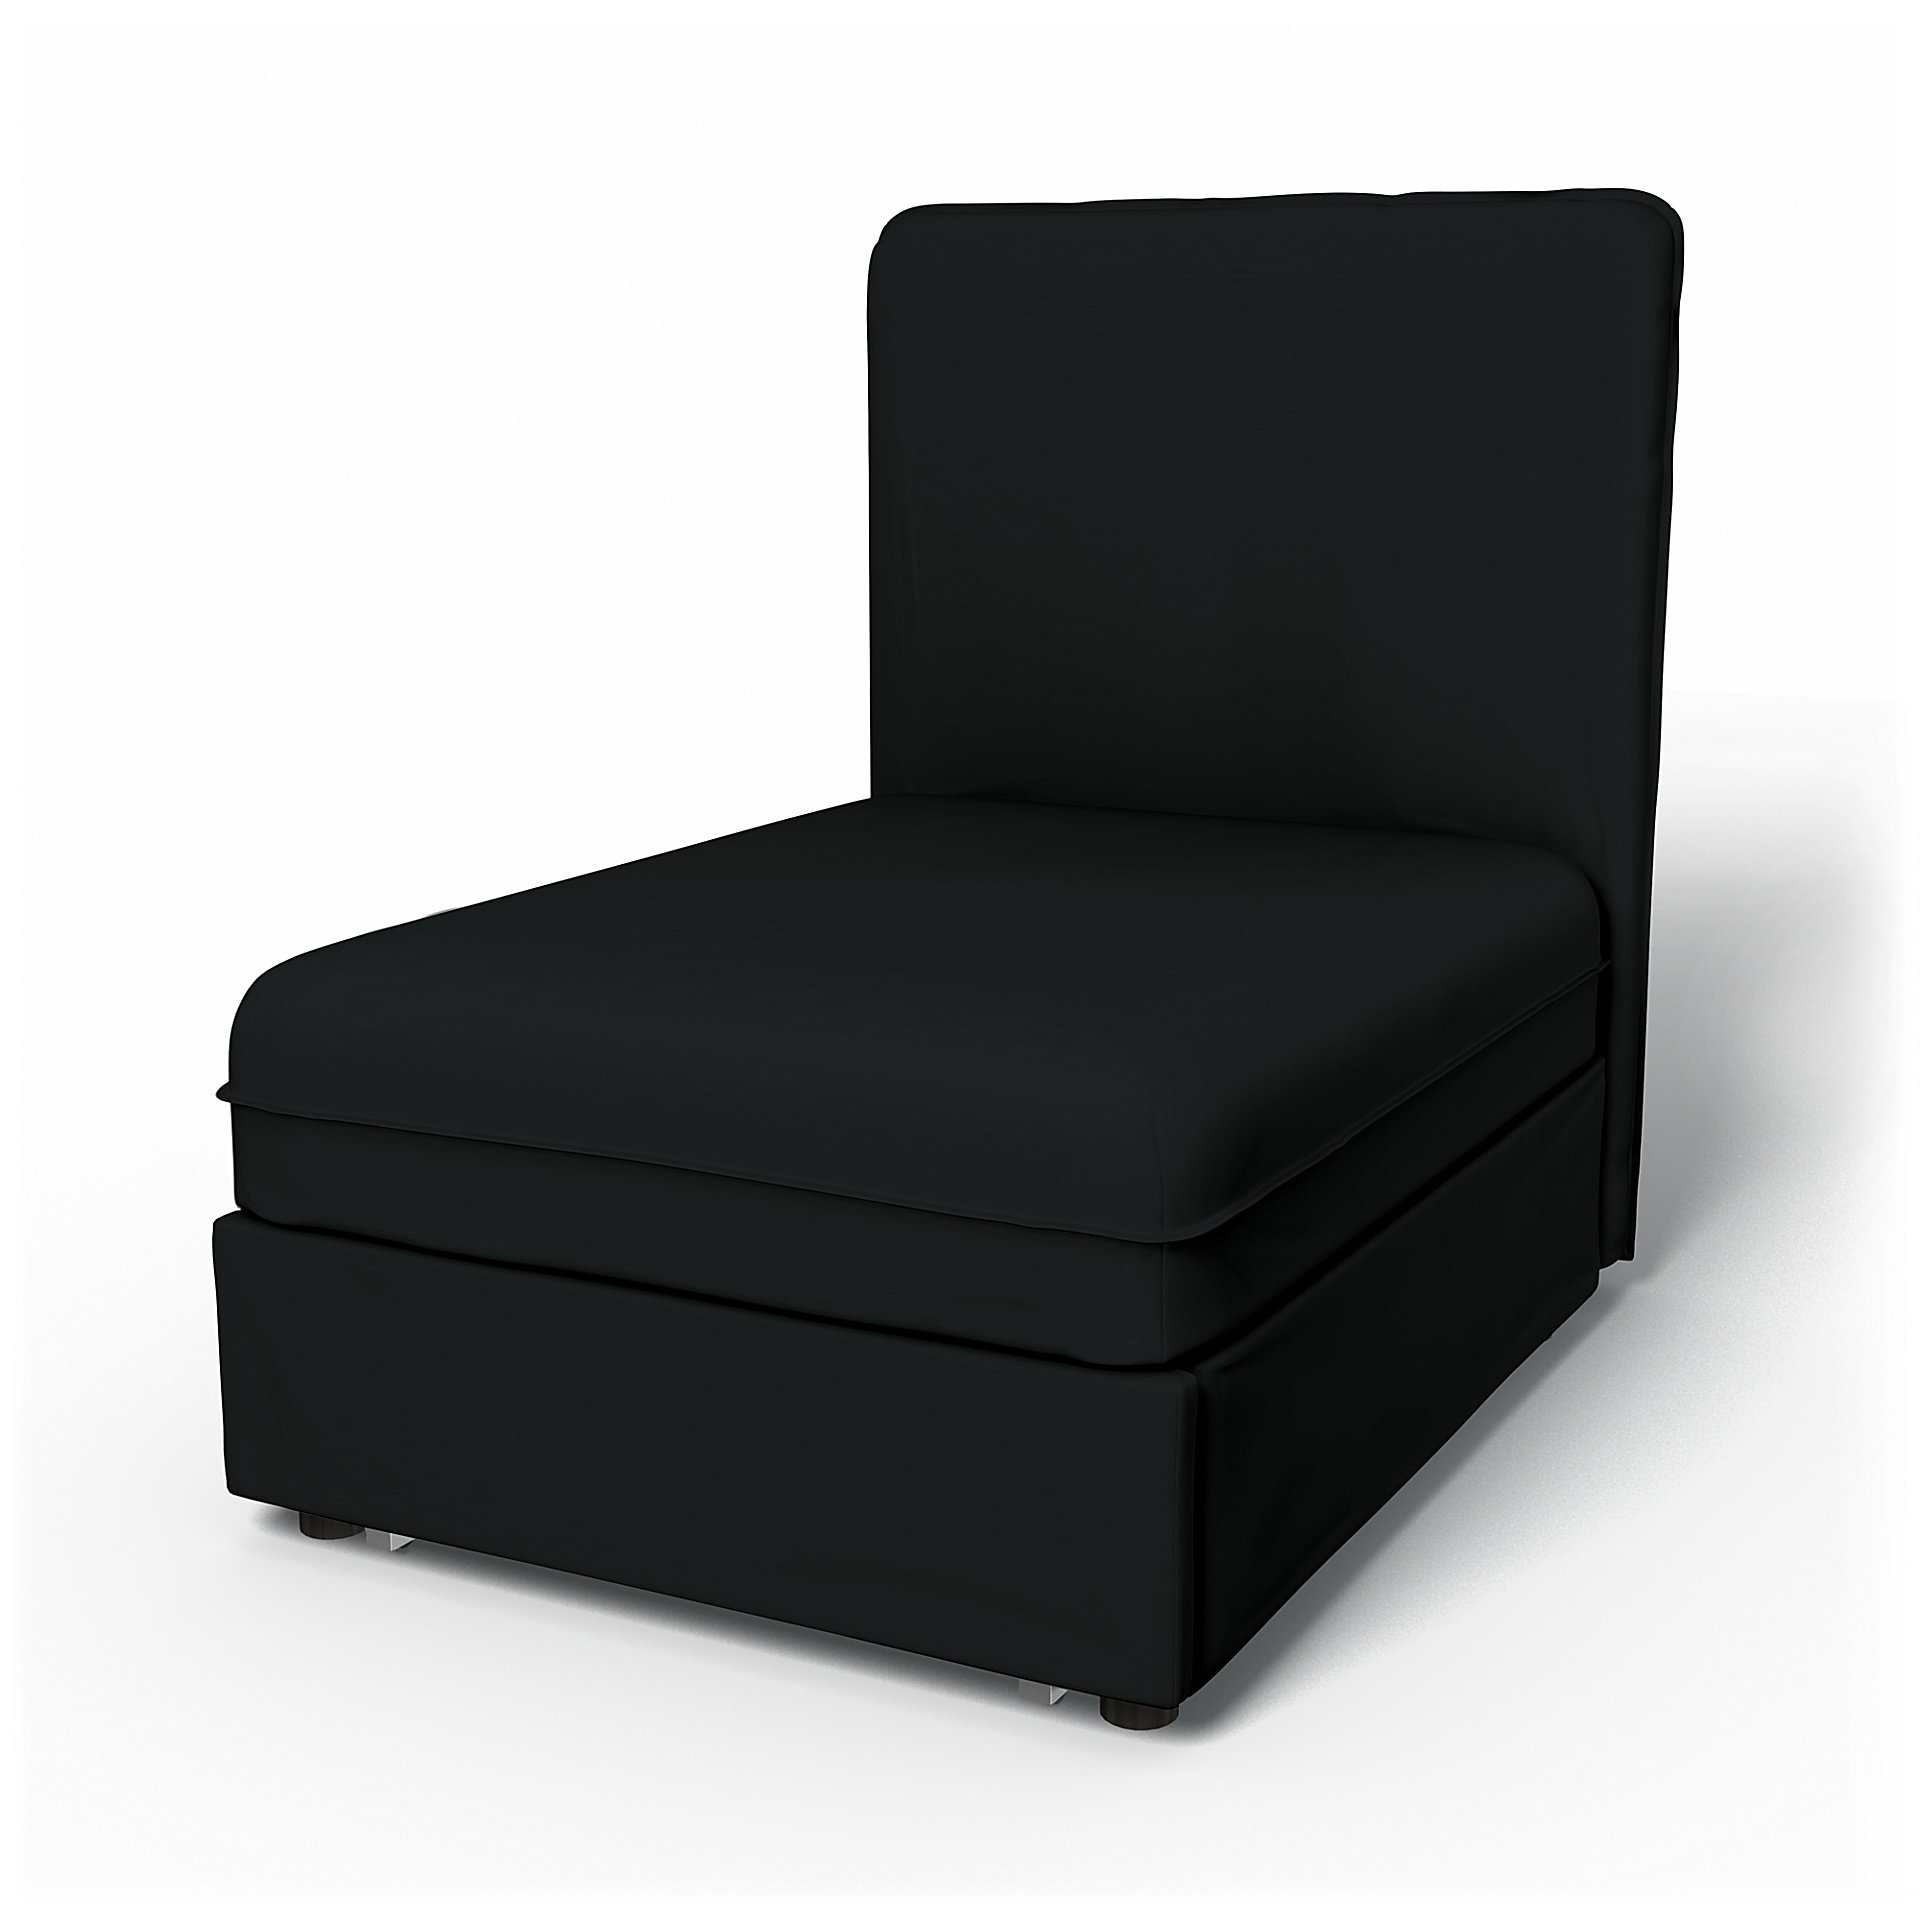 IKEA - Vallentuna Seat Module with High Back Sofa Bed Cover (80x100x46cm), Jet Black, Cotton - Bemz